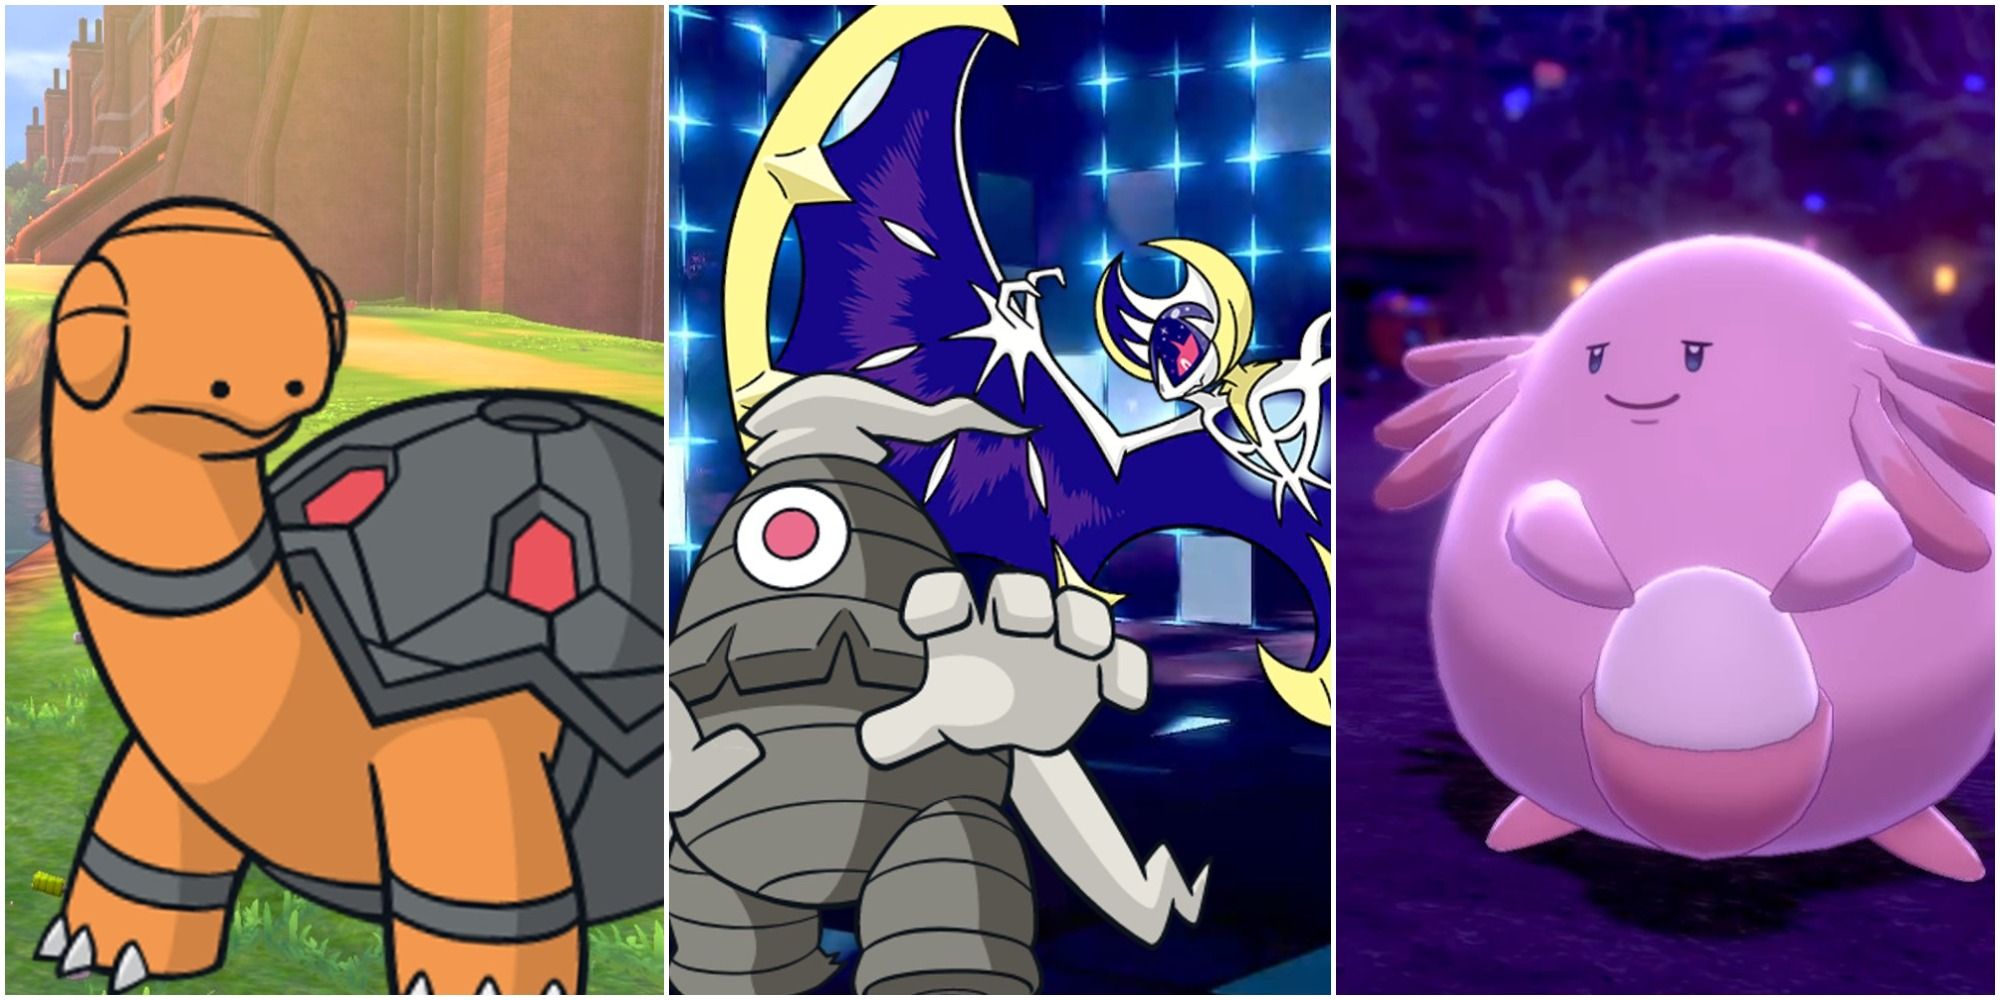 4 Pokemon: Torkoal, Dusclops, Lunala and Chansey 